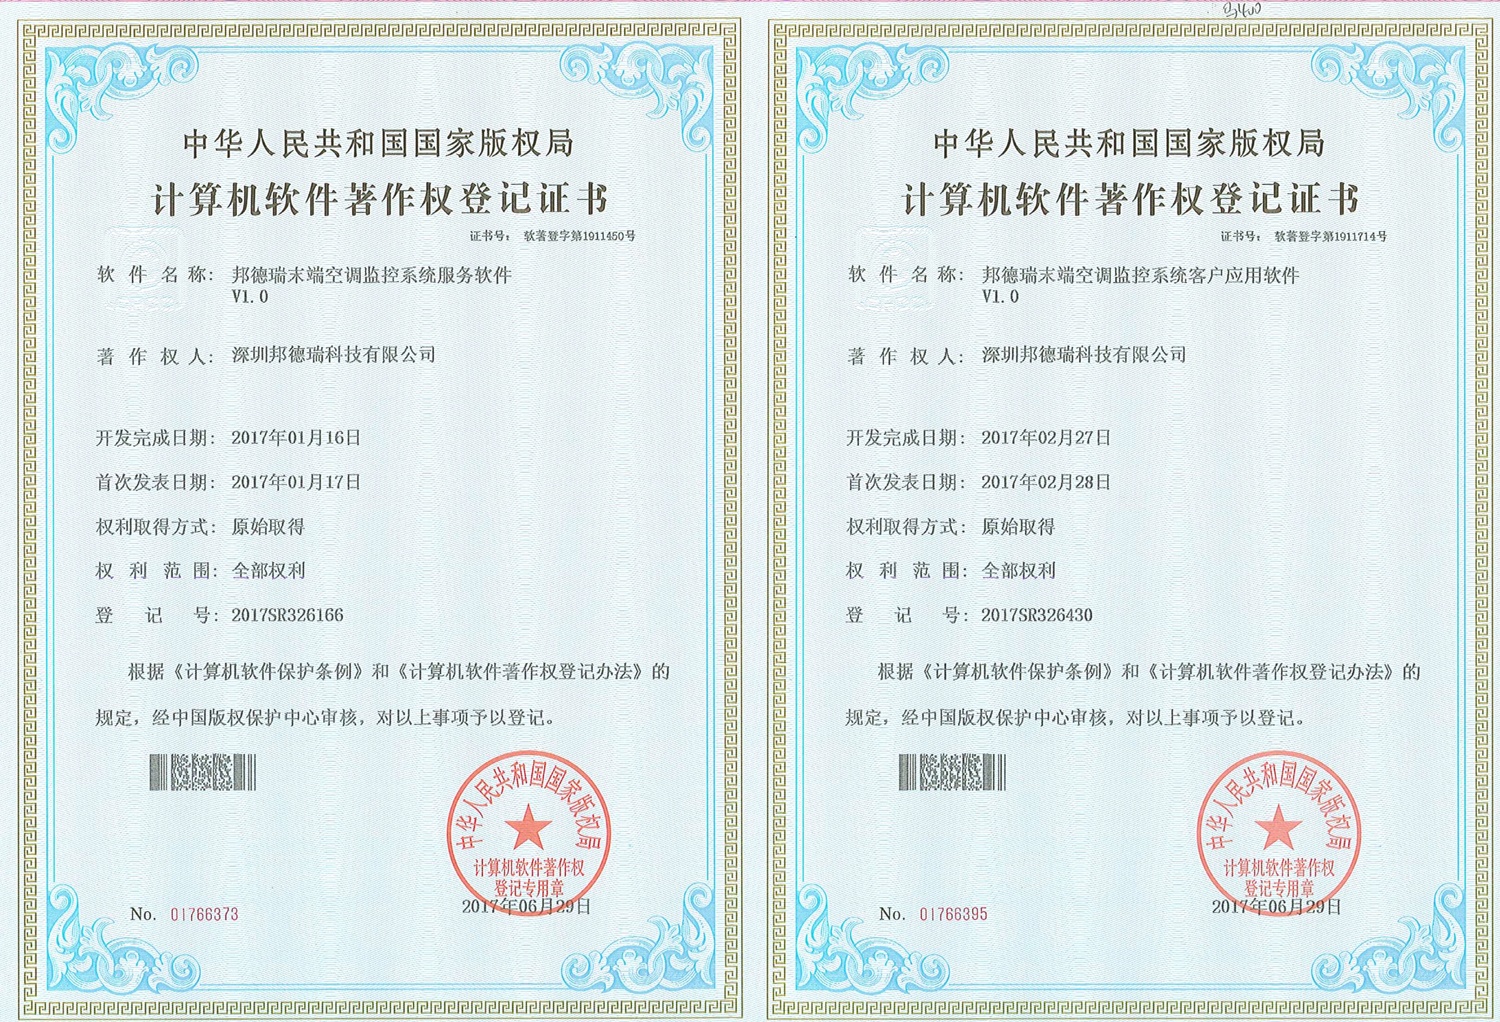 Terminal software copyright registration certificate